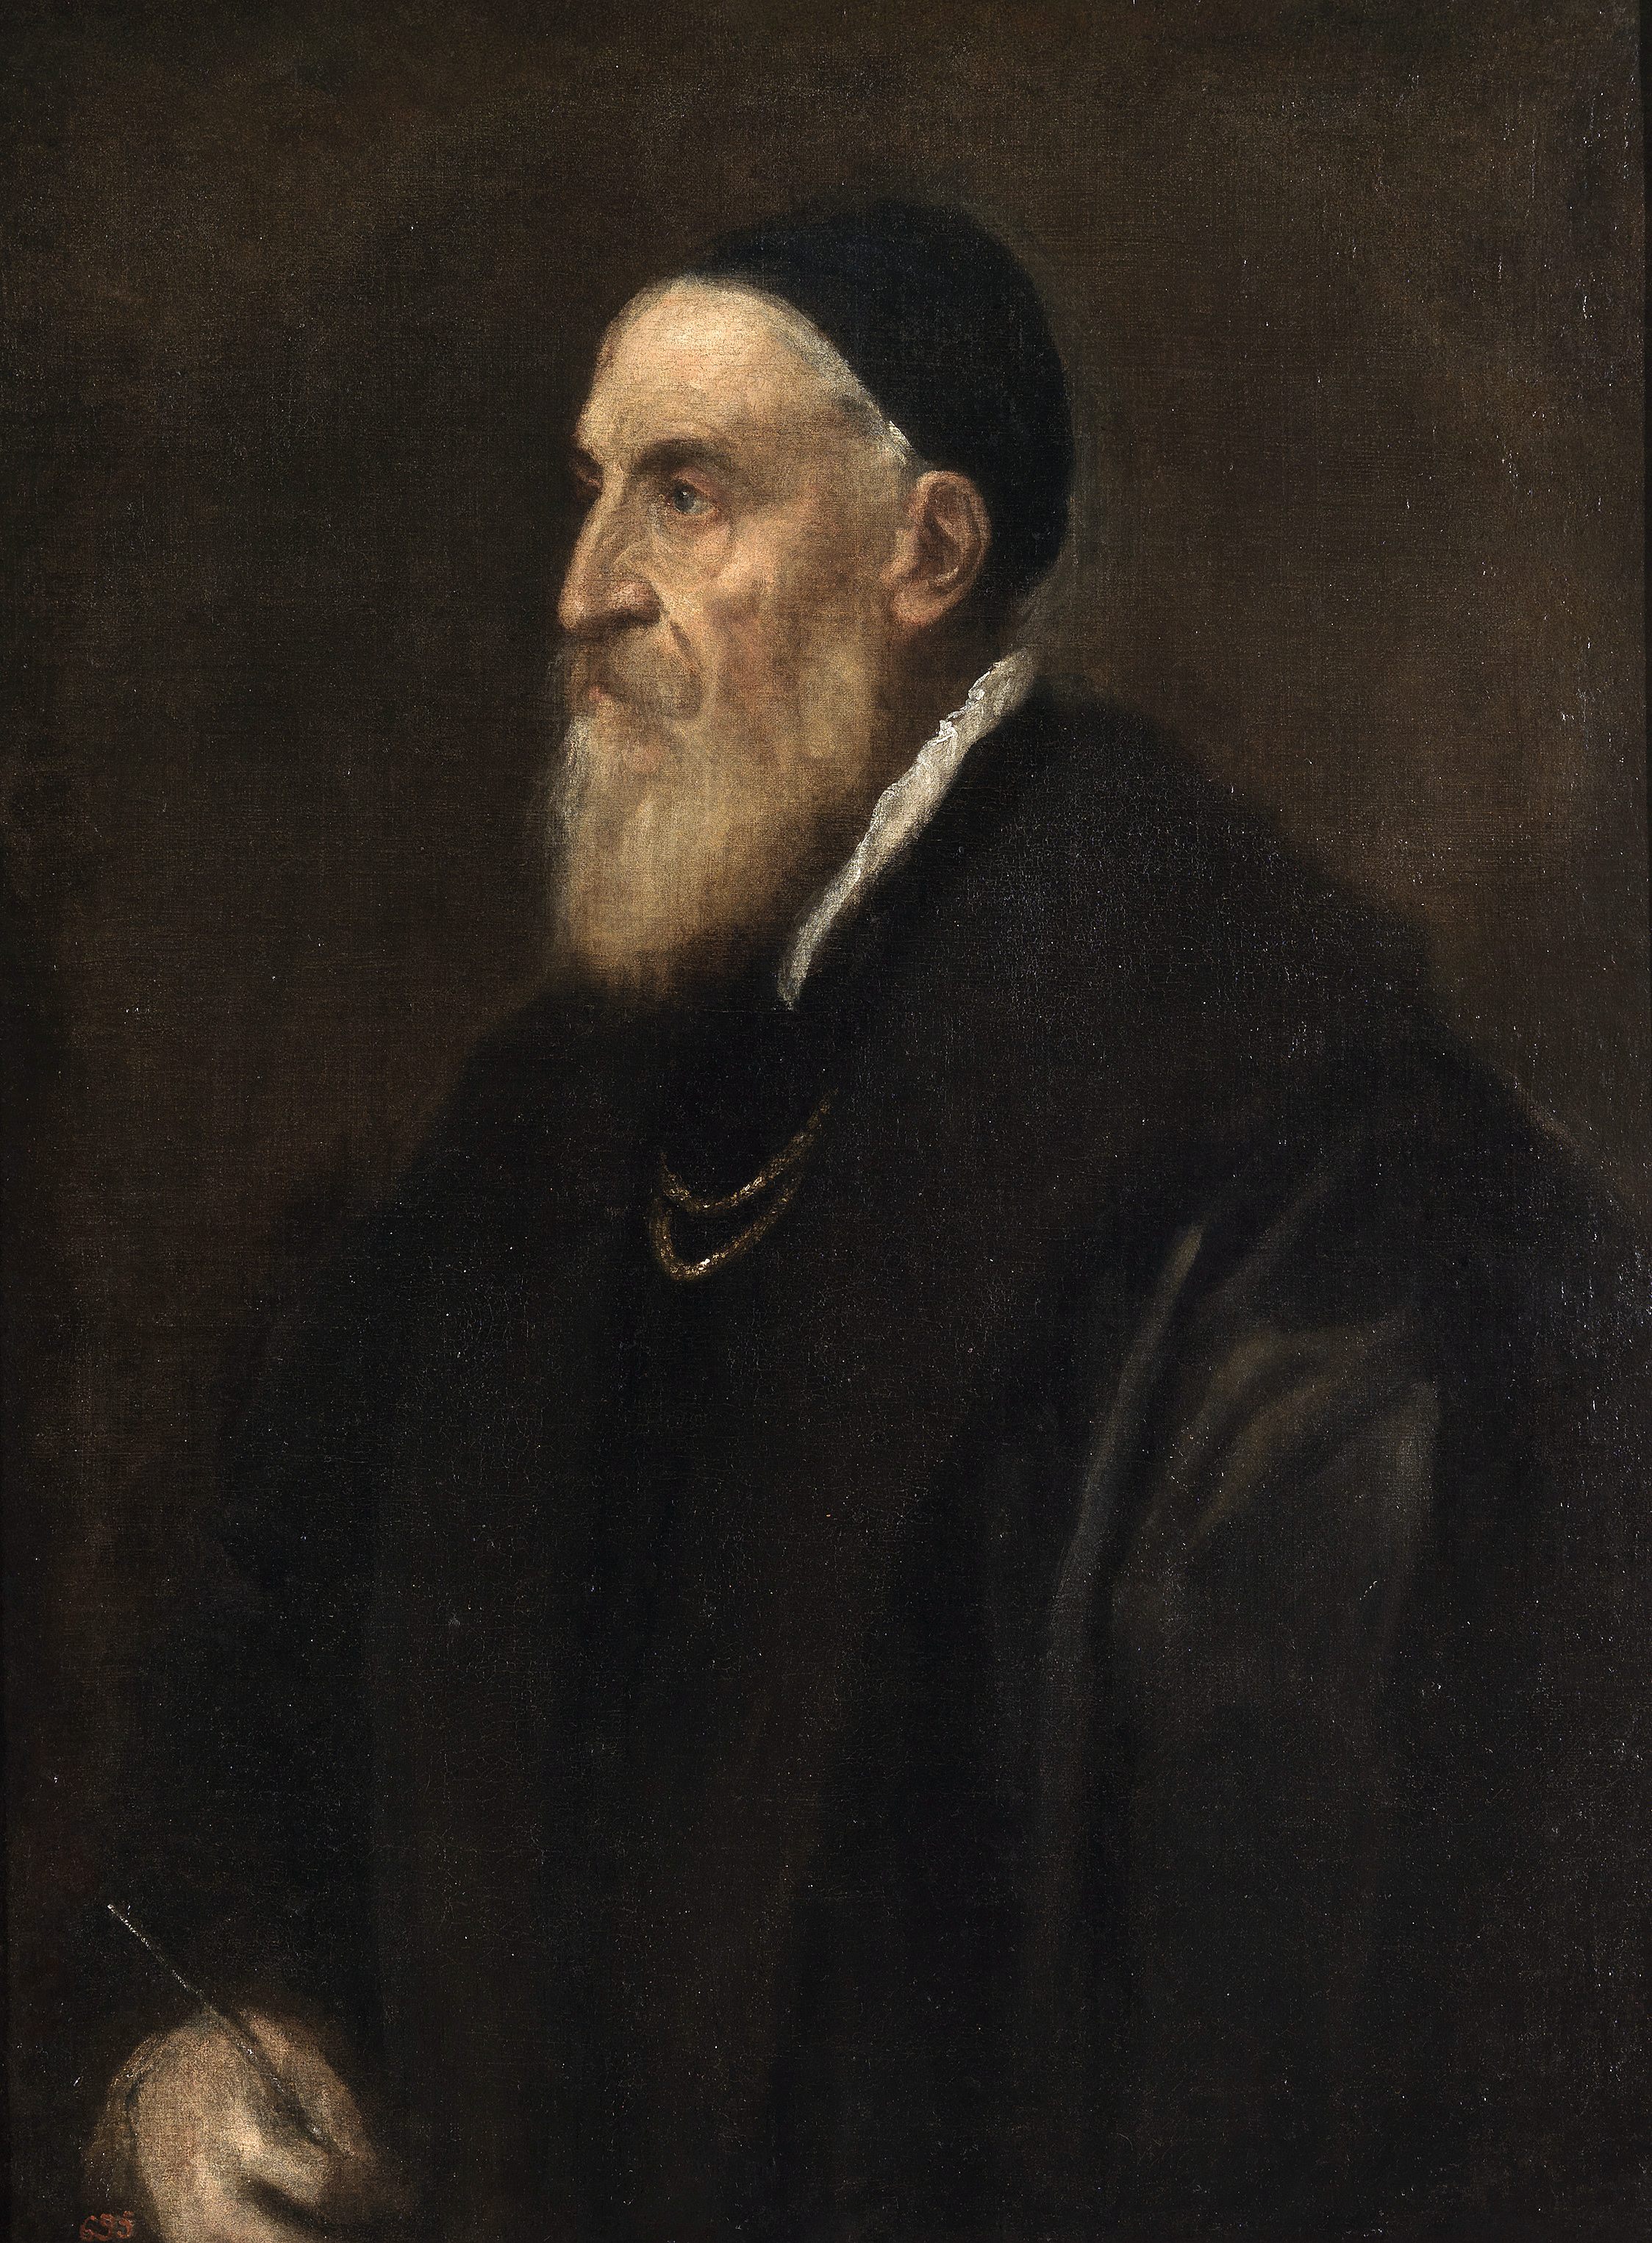 Titian - c. 1488/1490 - August 27, 1576